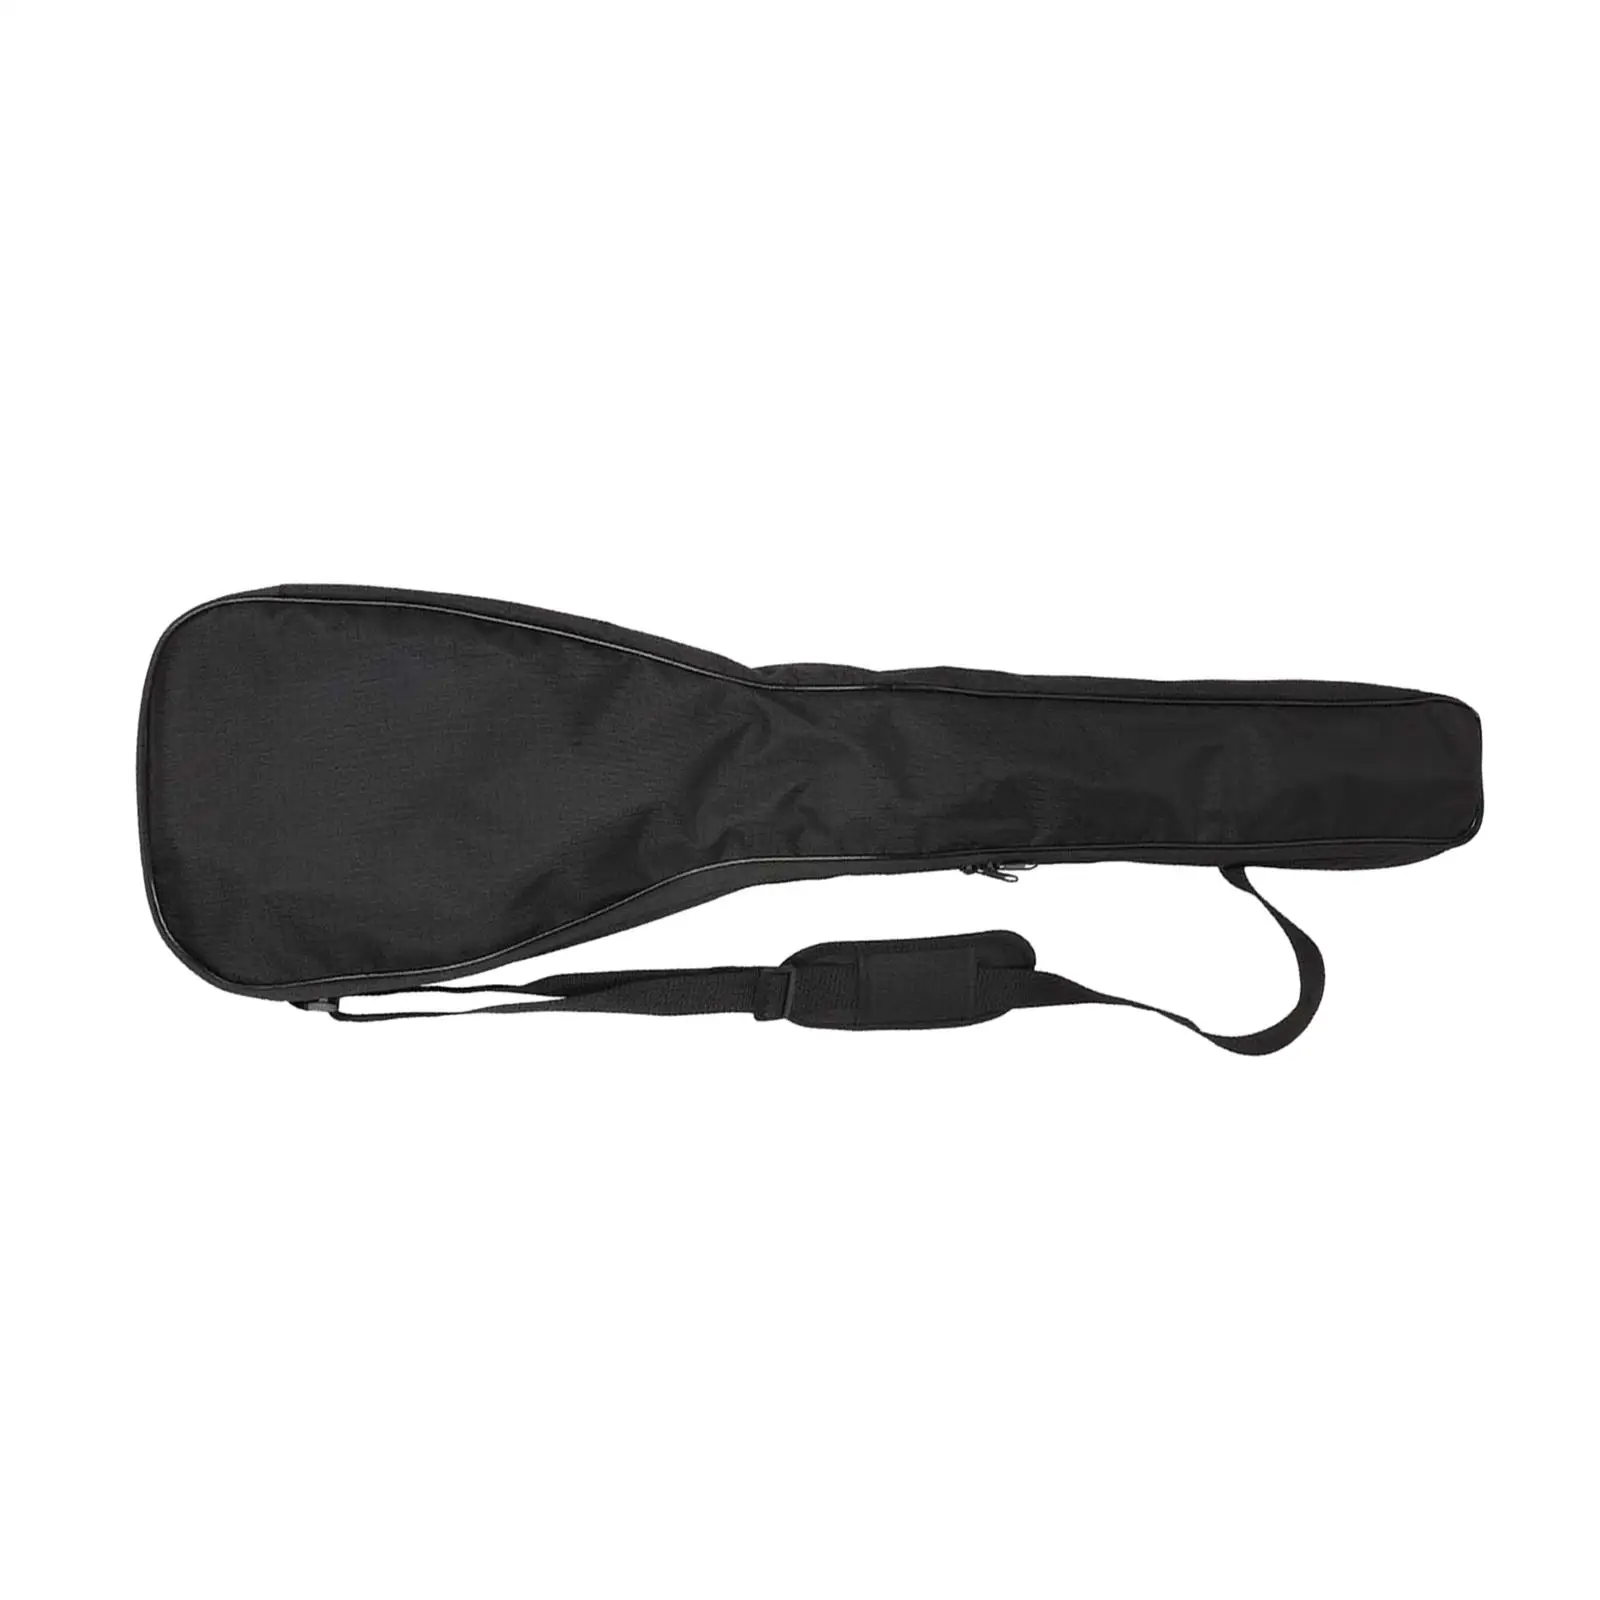 Canoe Kayak Paddle Bag for 3 Piece Split Paddle Length 96cm Kayak Accessories Wear Resistant